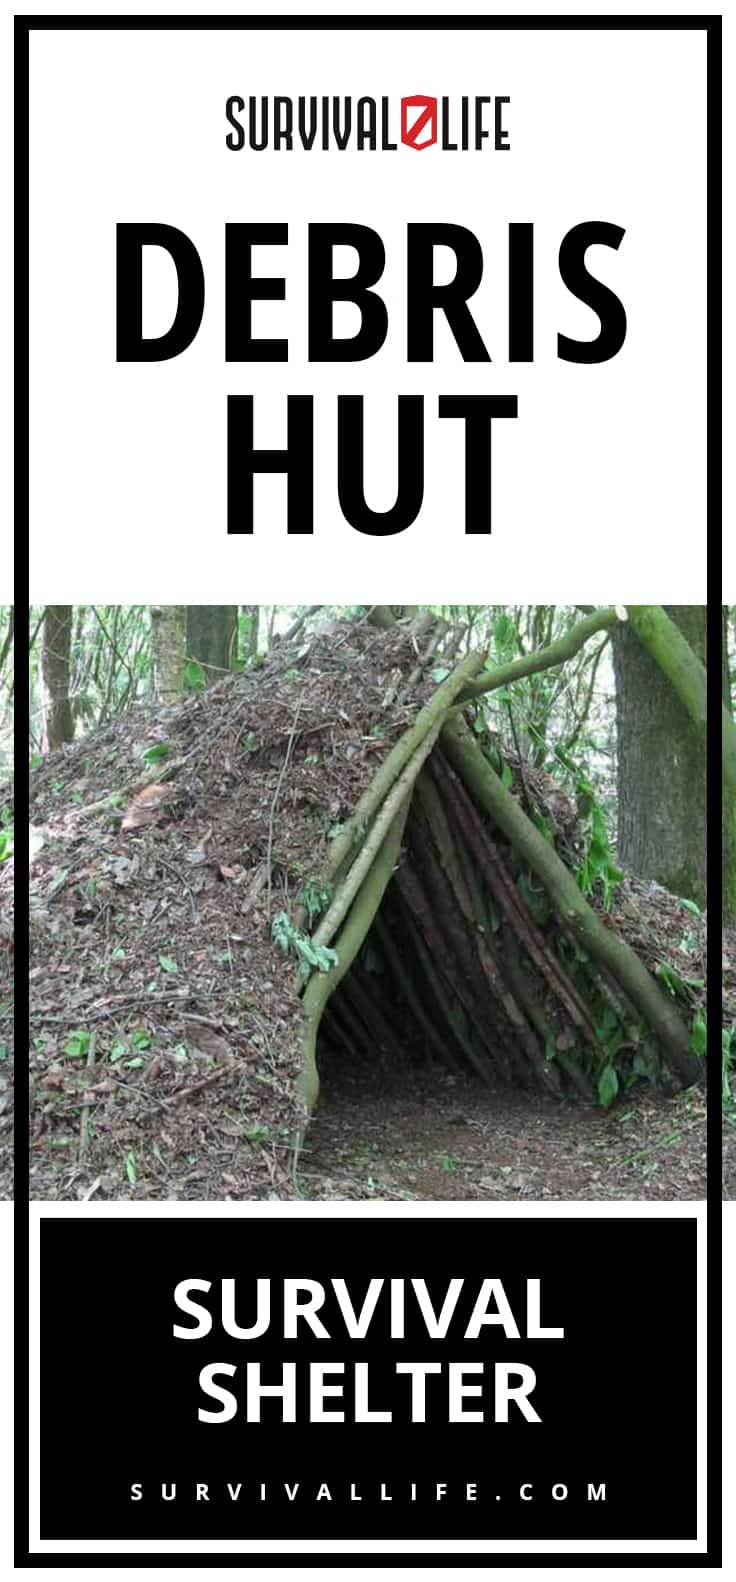 Debris Hut Survival Shelter